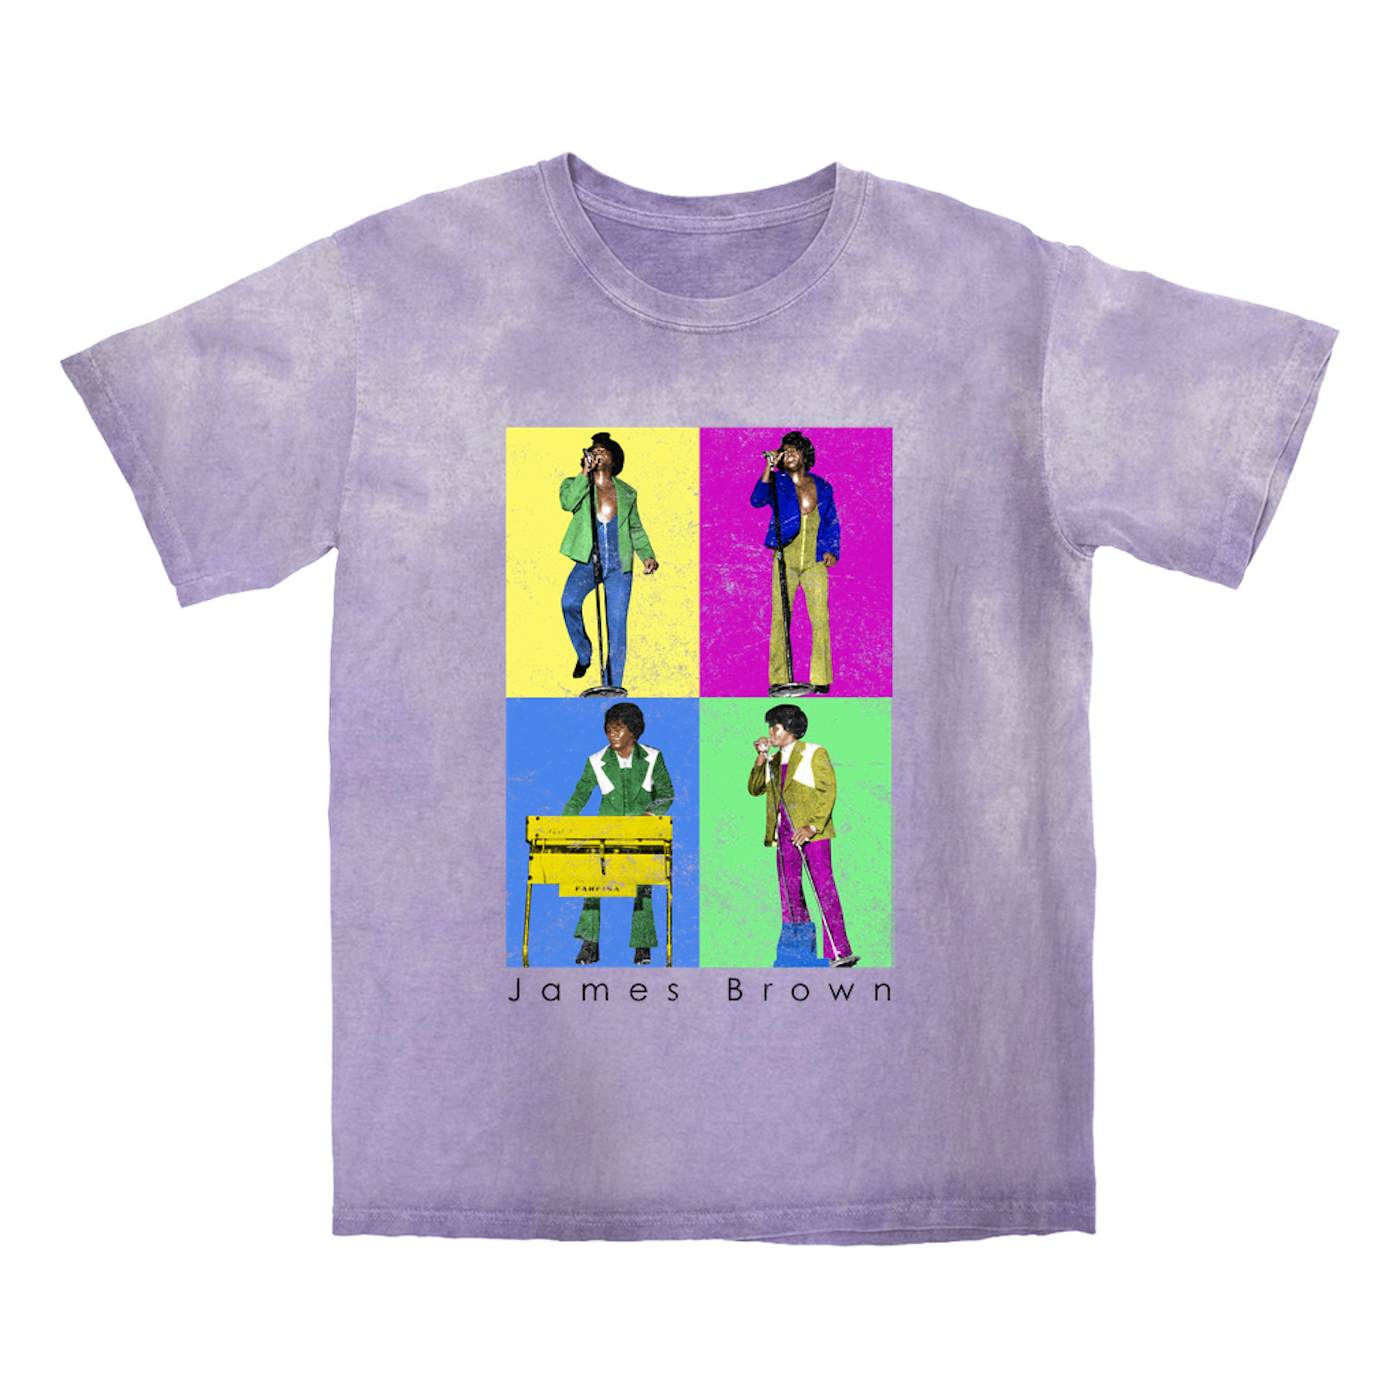 James Brown T-shirt | Pop Art Sex Machine Dance Moves James Brown Color Blast Shirt